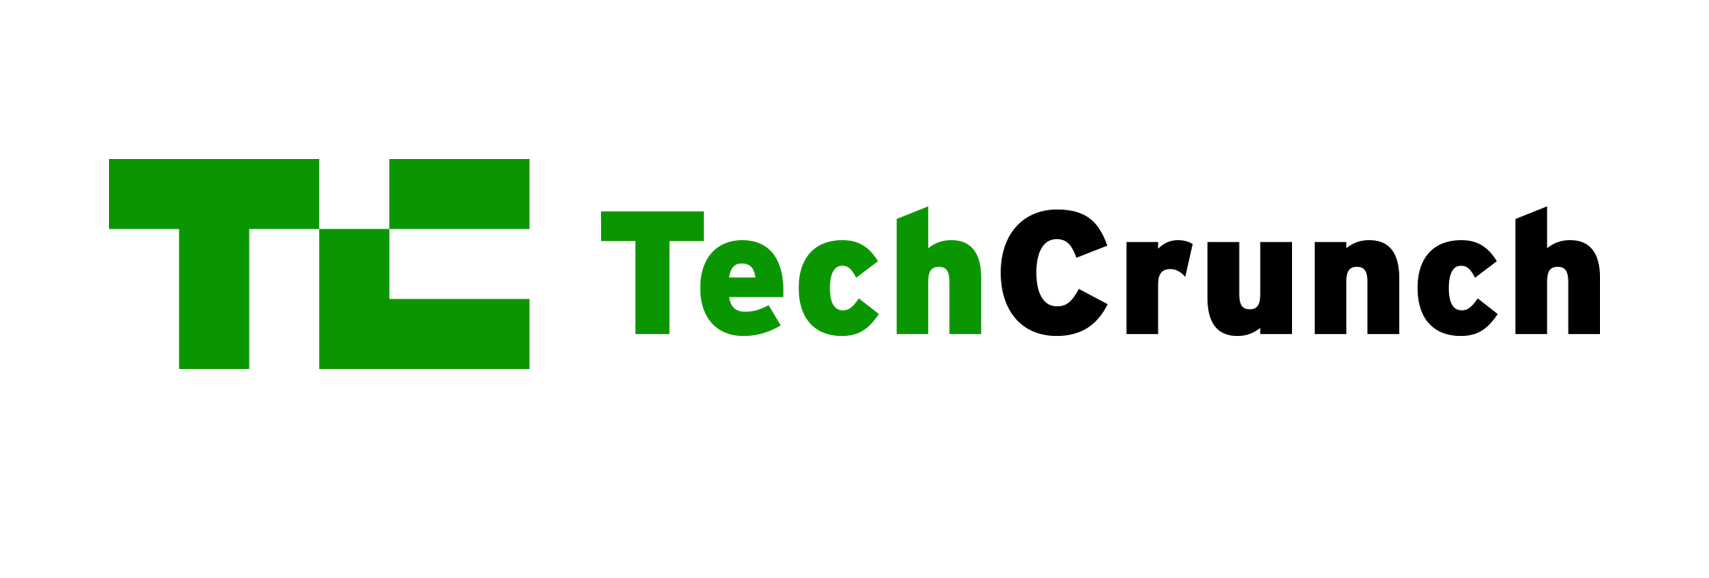 techcrunch-logo-1.png